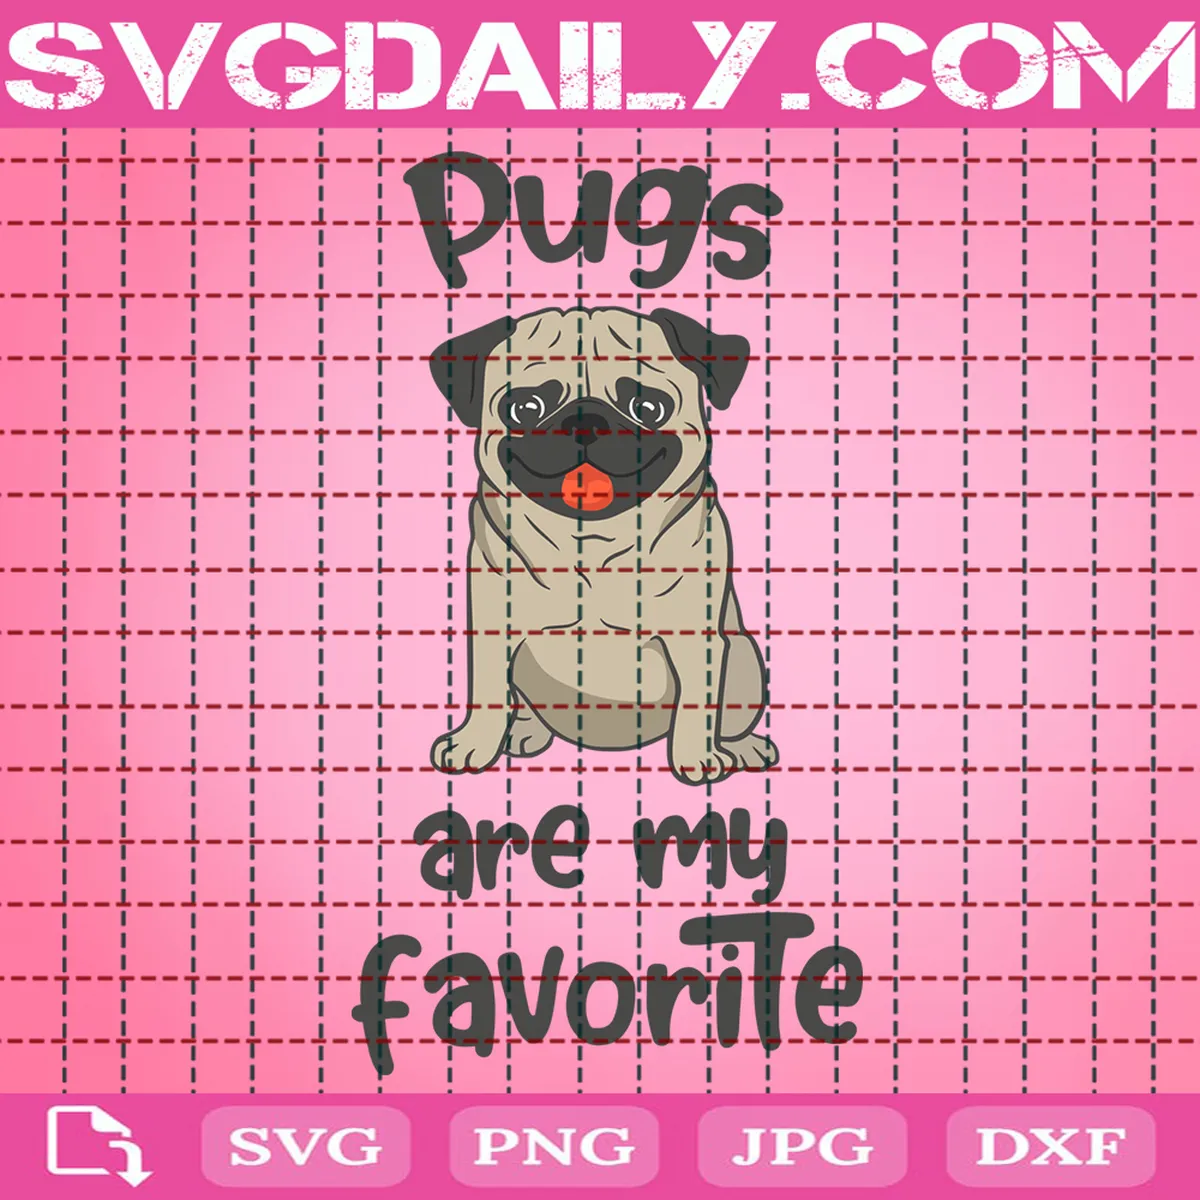 Pugs Are My Favorite Svg